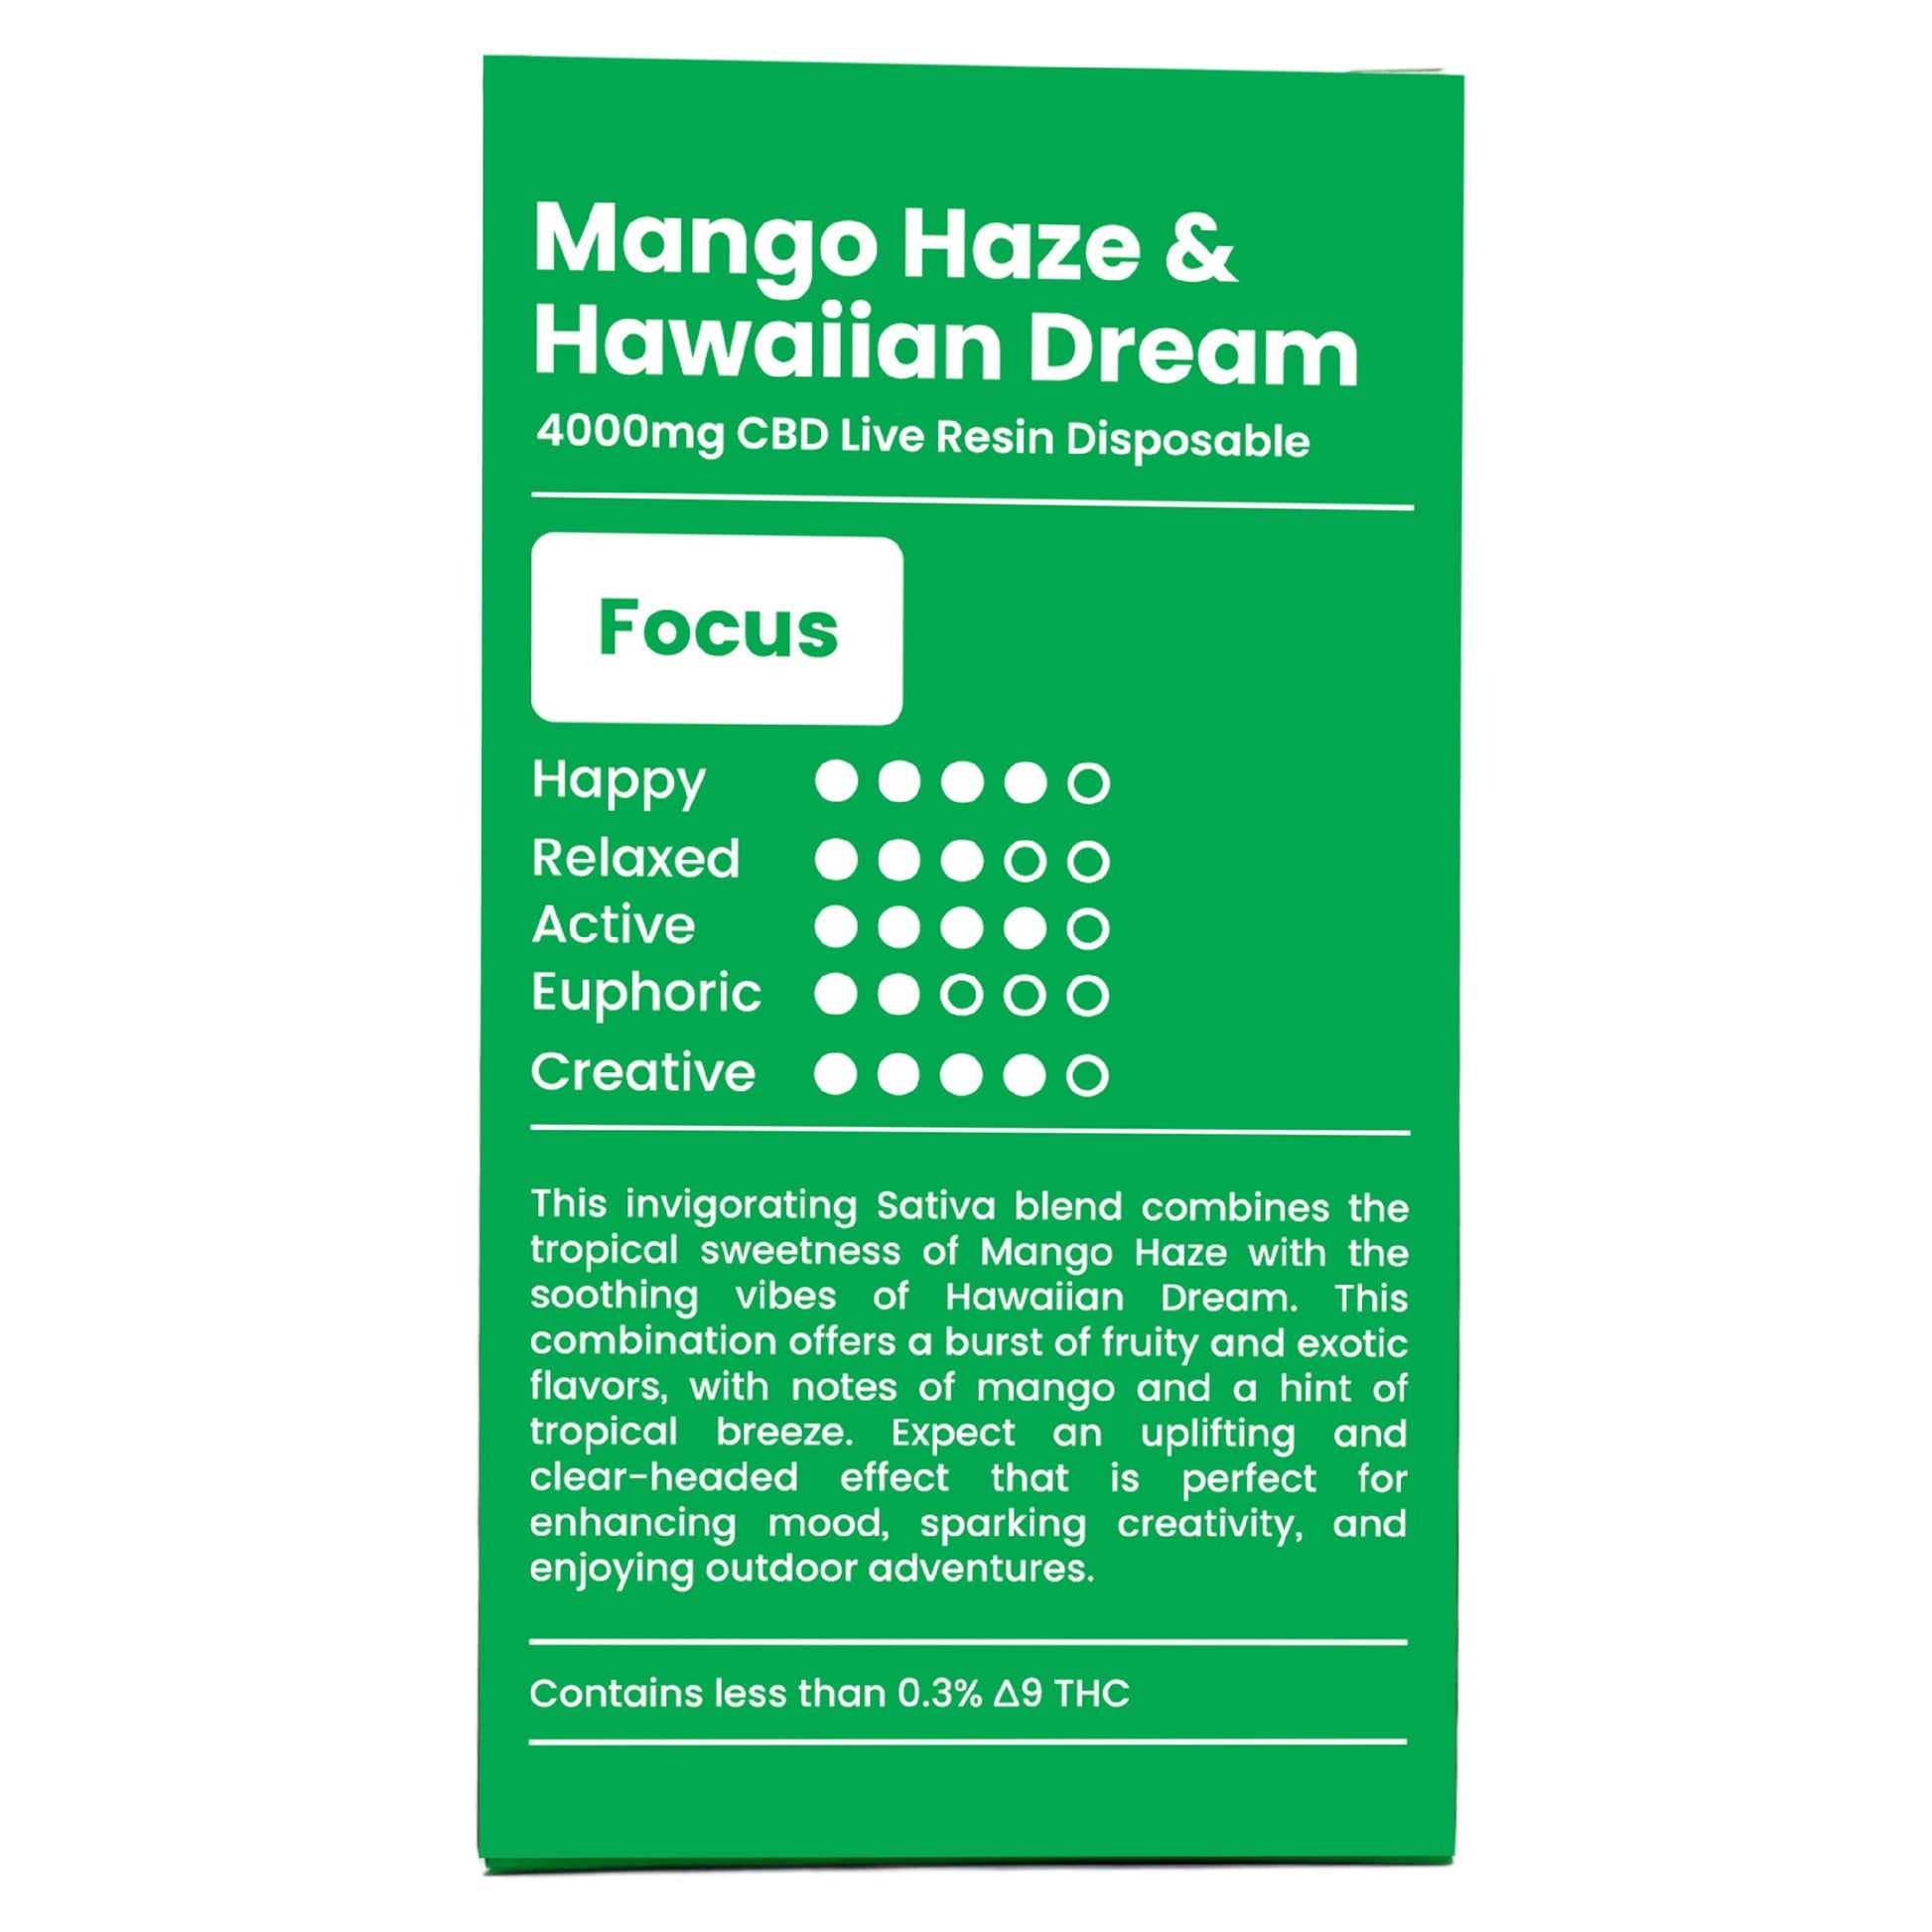 Mango Haze & Hawaiian Dream Disposable CBD Vape - GreenPost CBD - www.GreenPostCBD.com